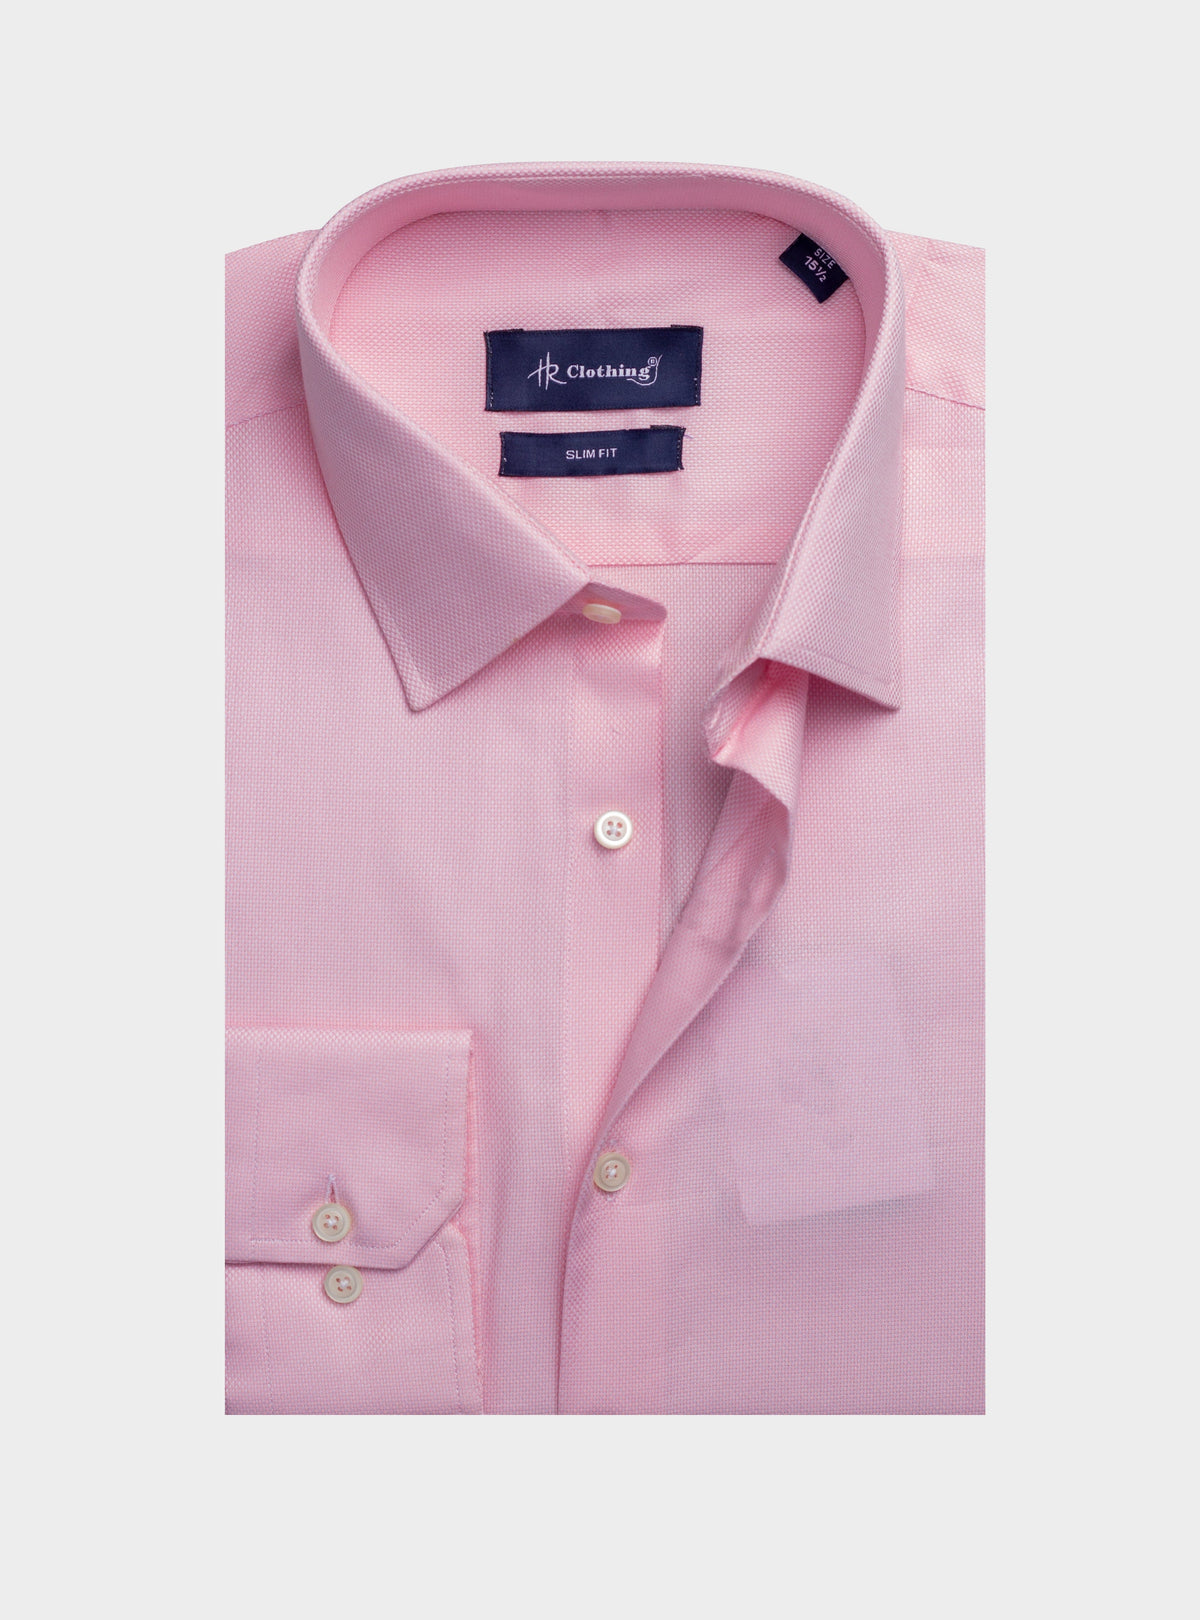 Formal Shirt Dsh-0128 Texture Pink